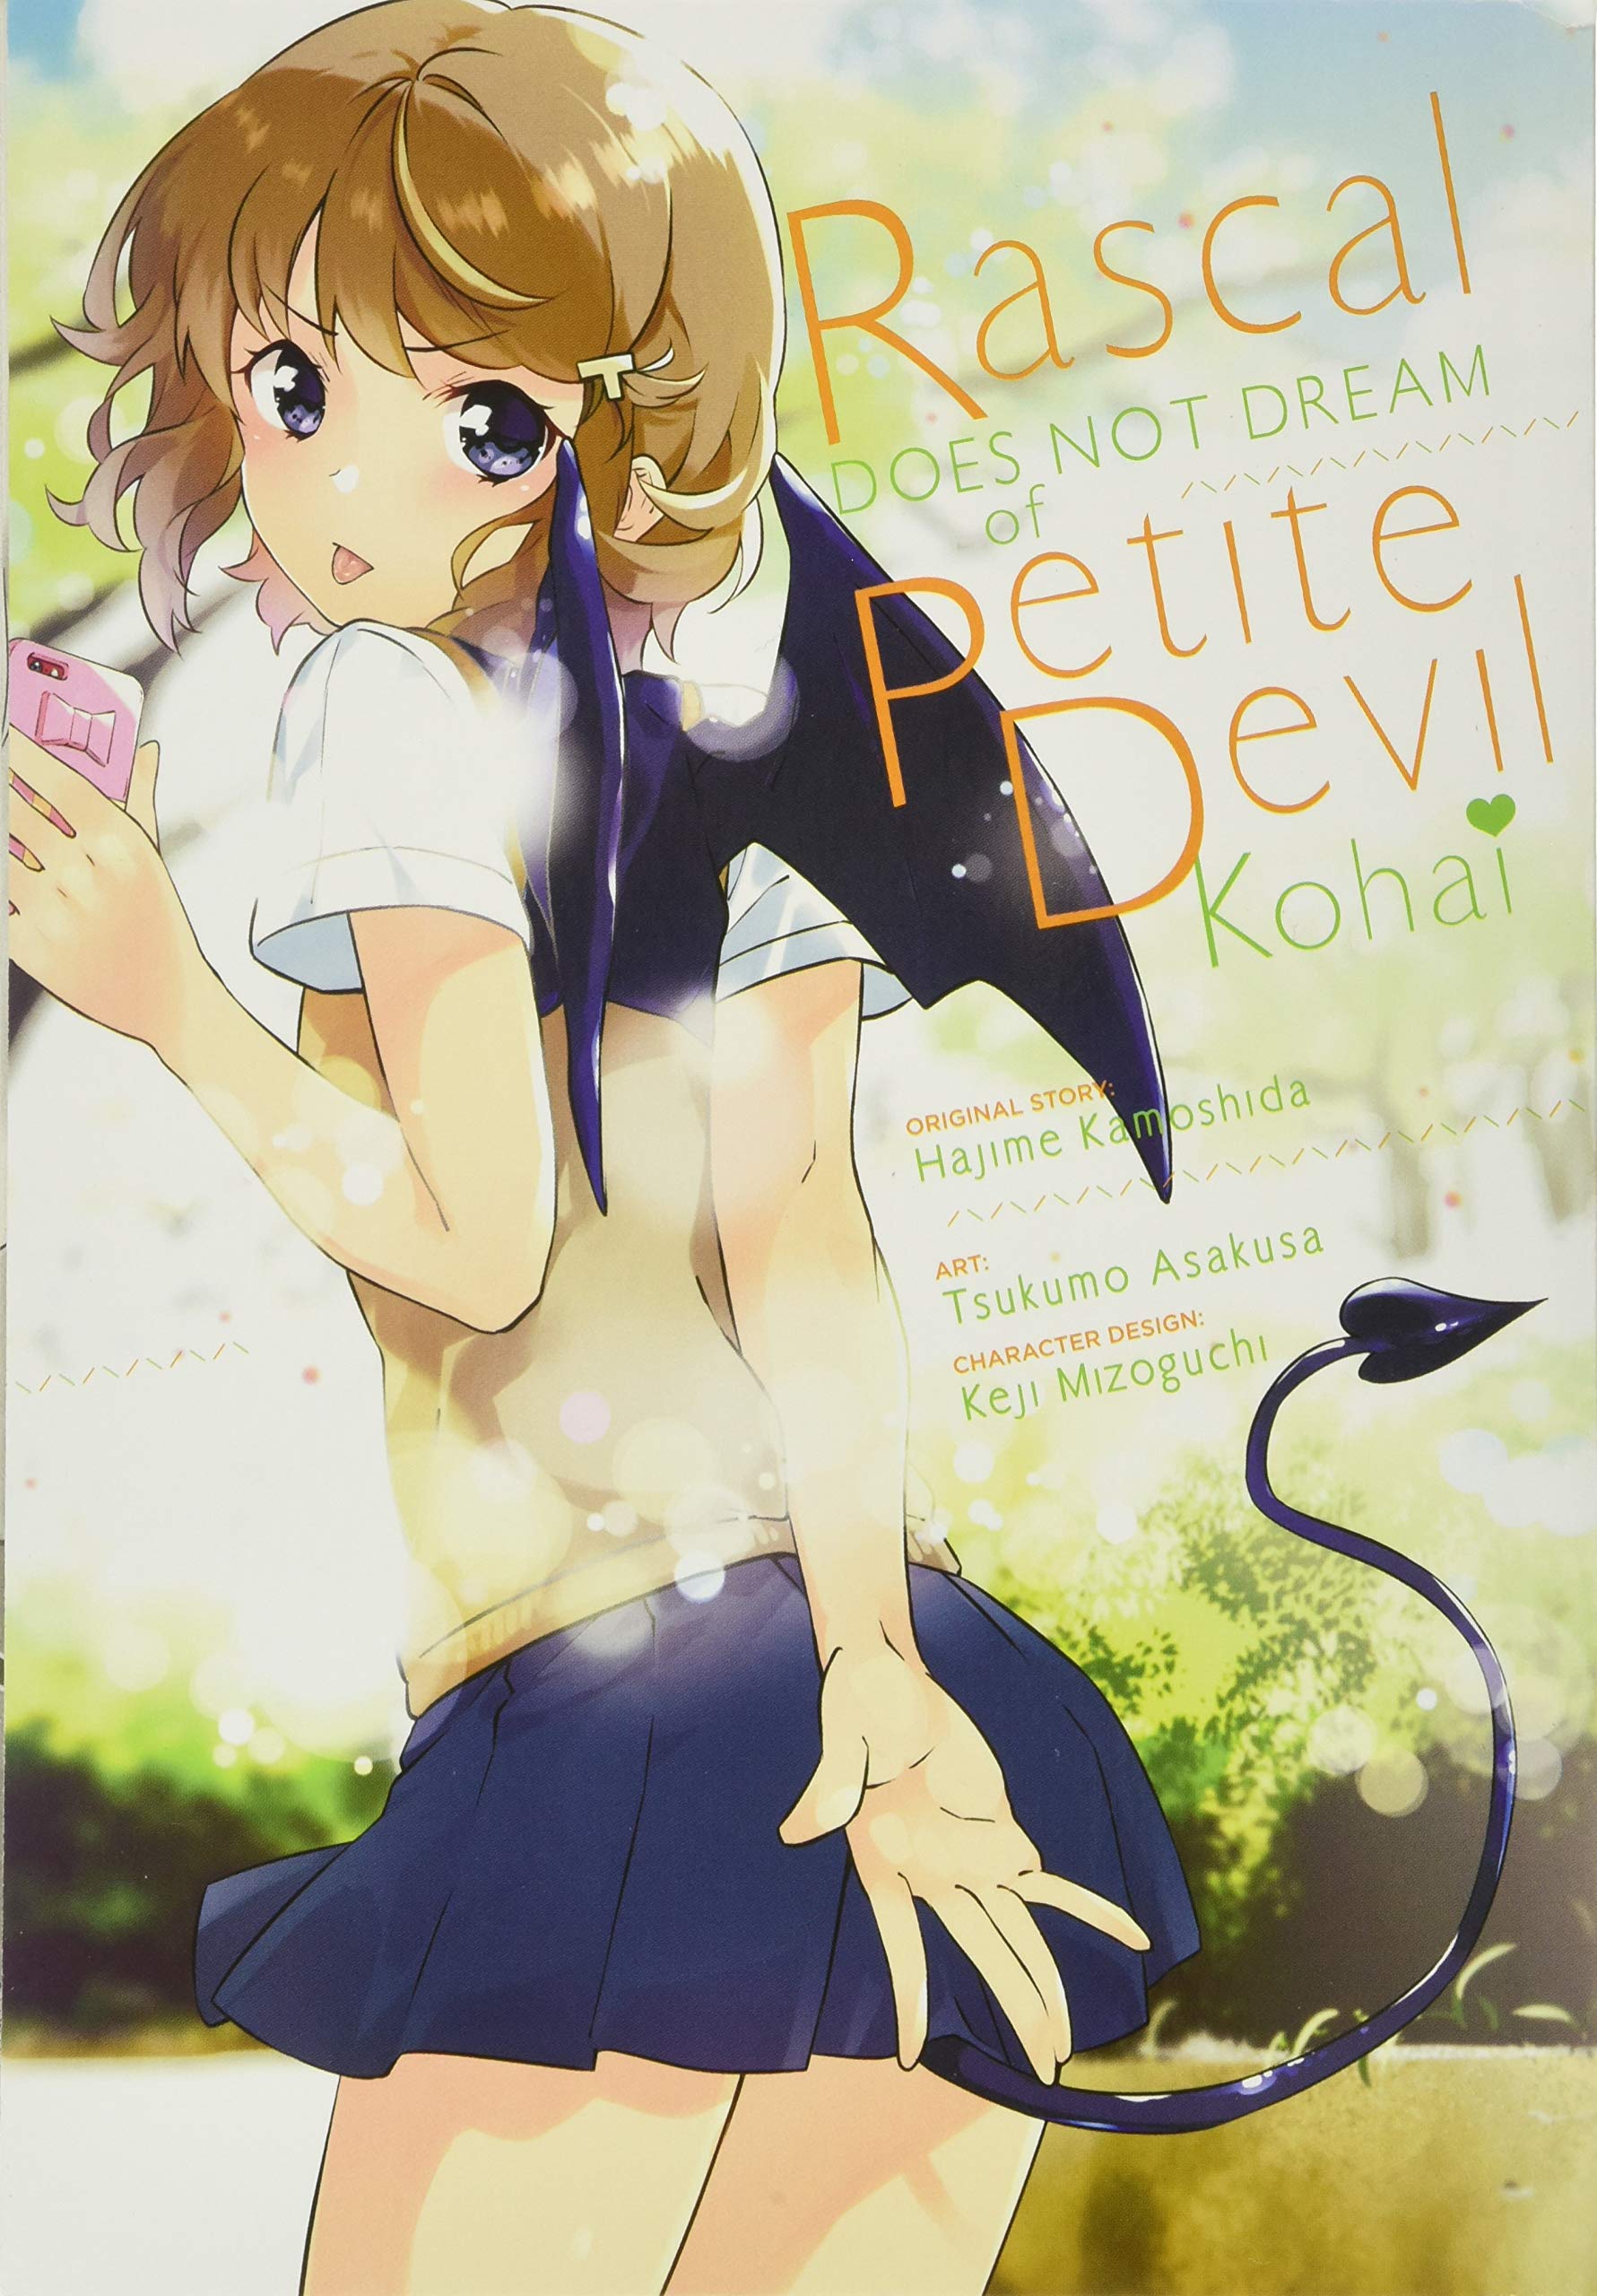 Rascal Does Not Dream of Petite Devil Kohai (manga) (Rascal Does Not Dream (manga), 2)